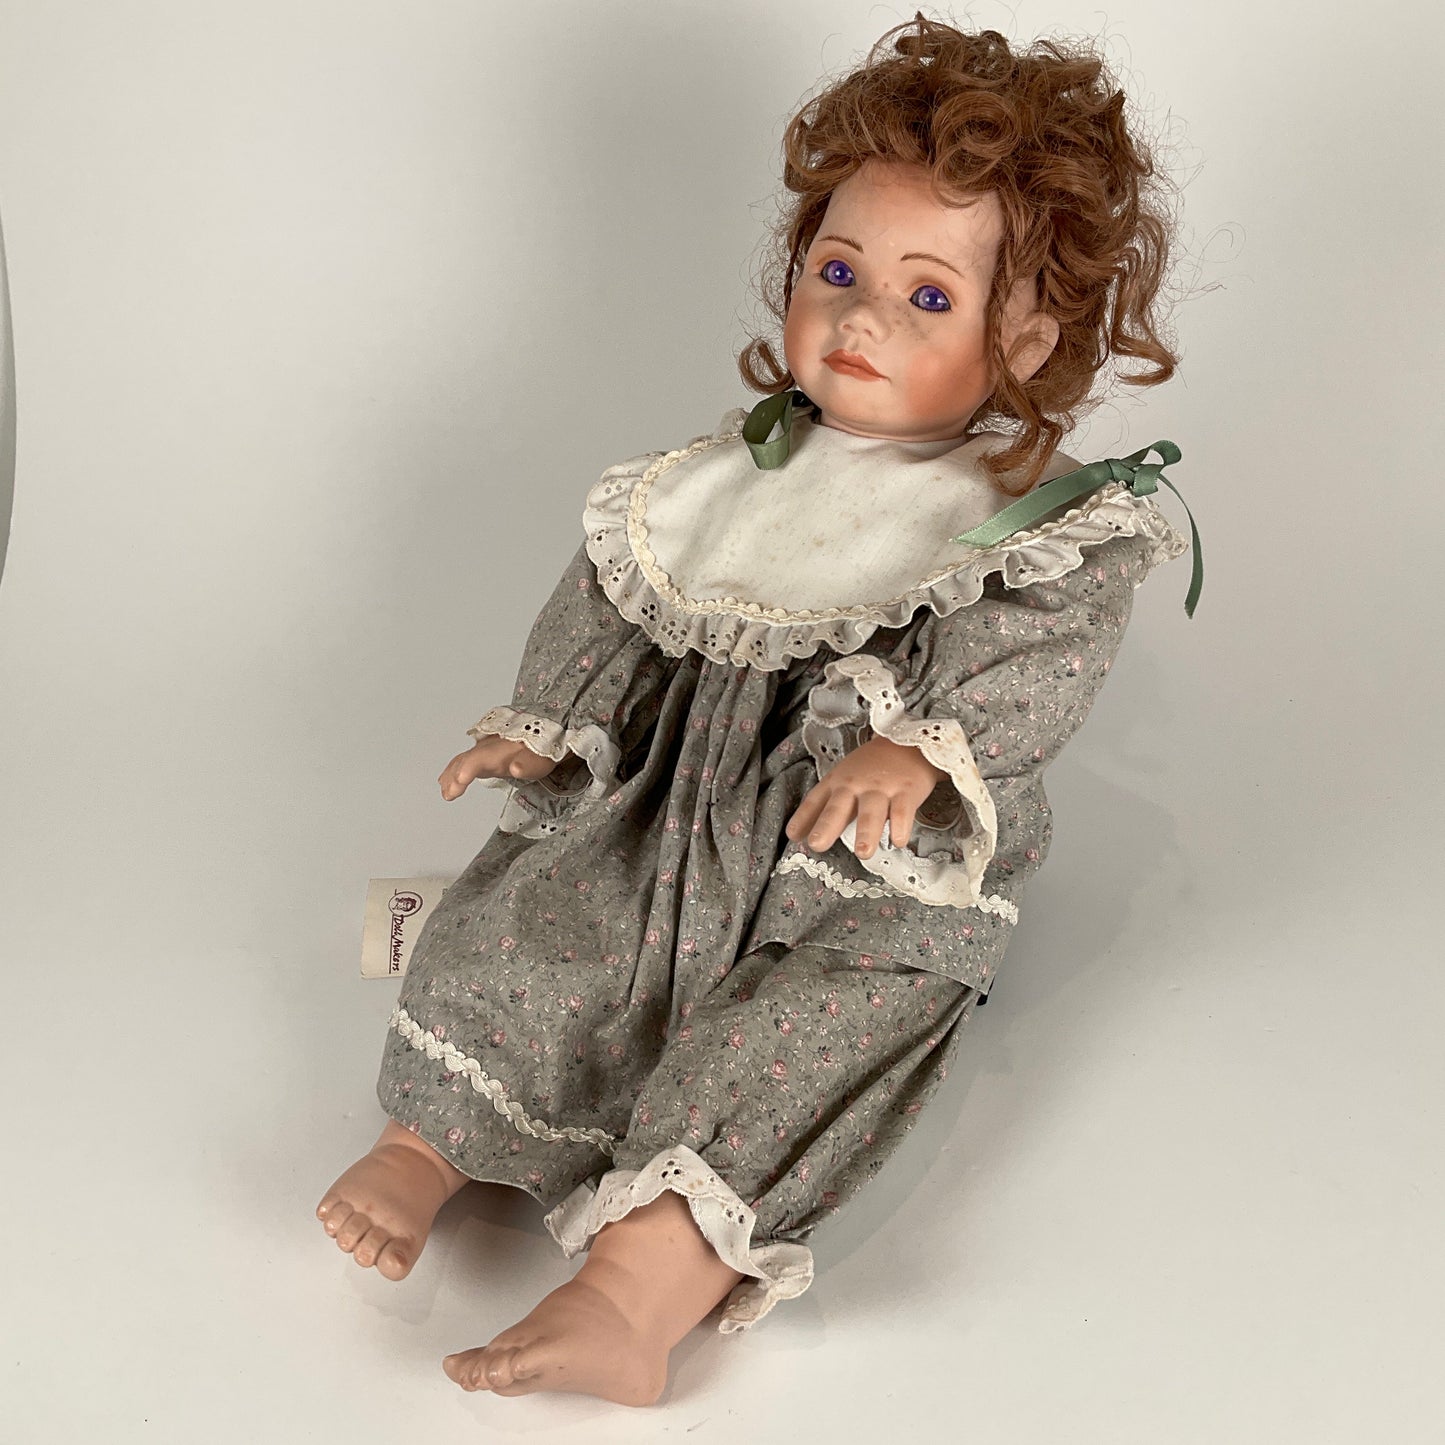 Elvas Dolls - Porcelain Doll Collectibles